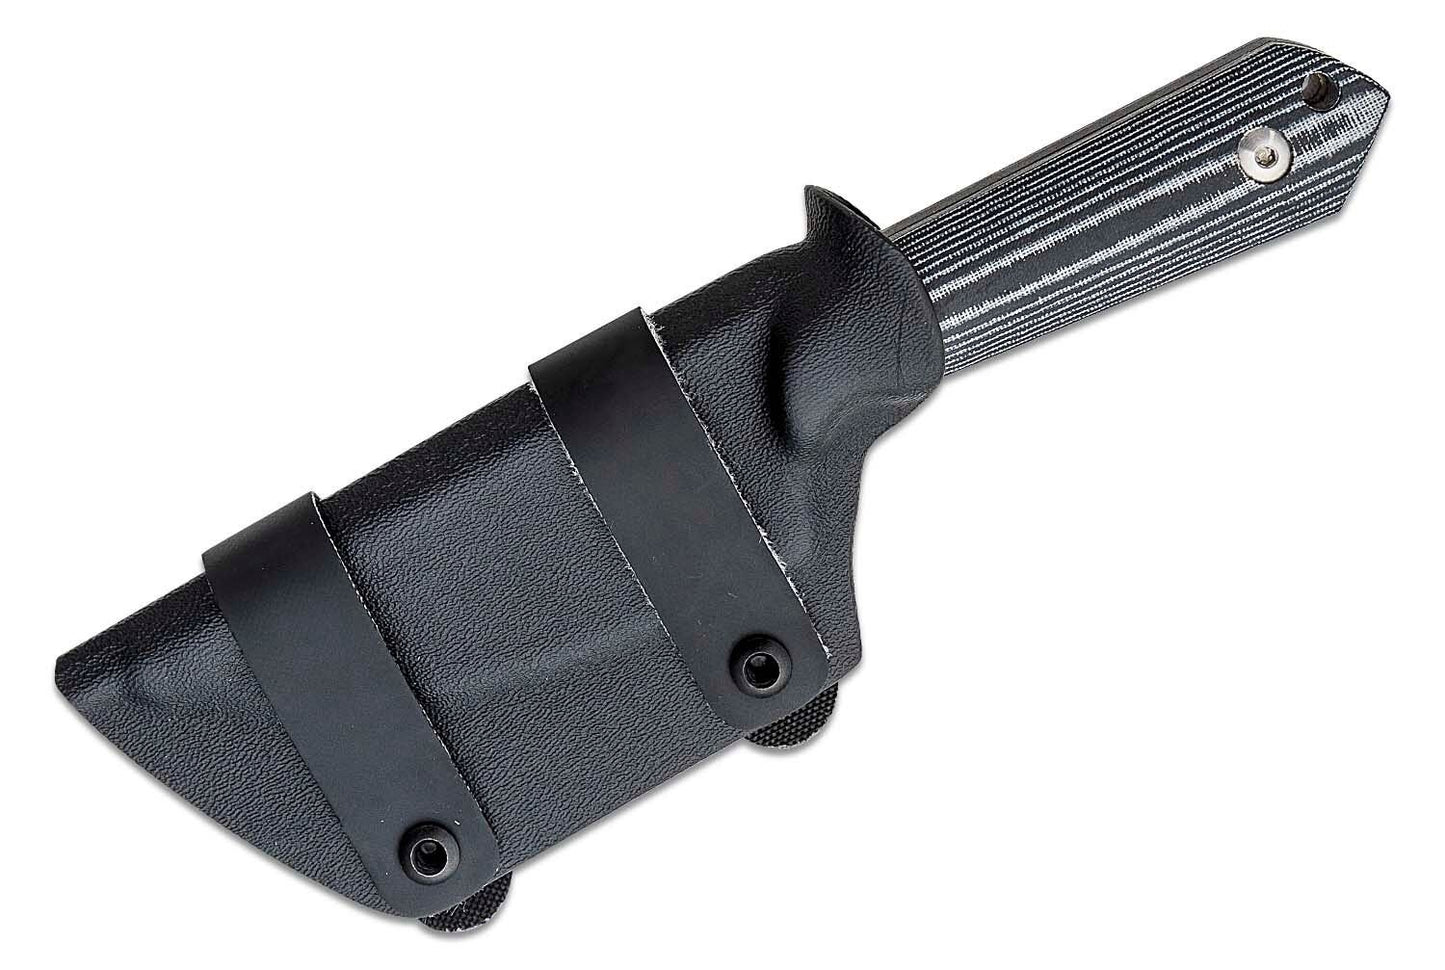 Kizer Cutlery 1040 Maverick Customs Harpoon Fixed Blade Knife 3.875" Black D2, Black Micarta Handles and Kydex Sheath